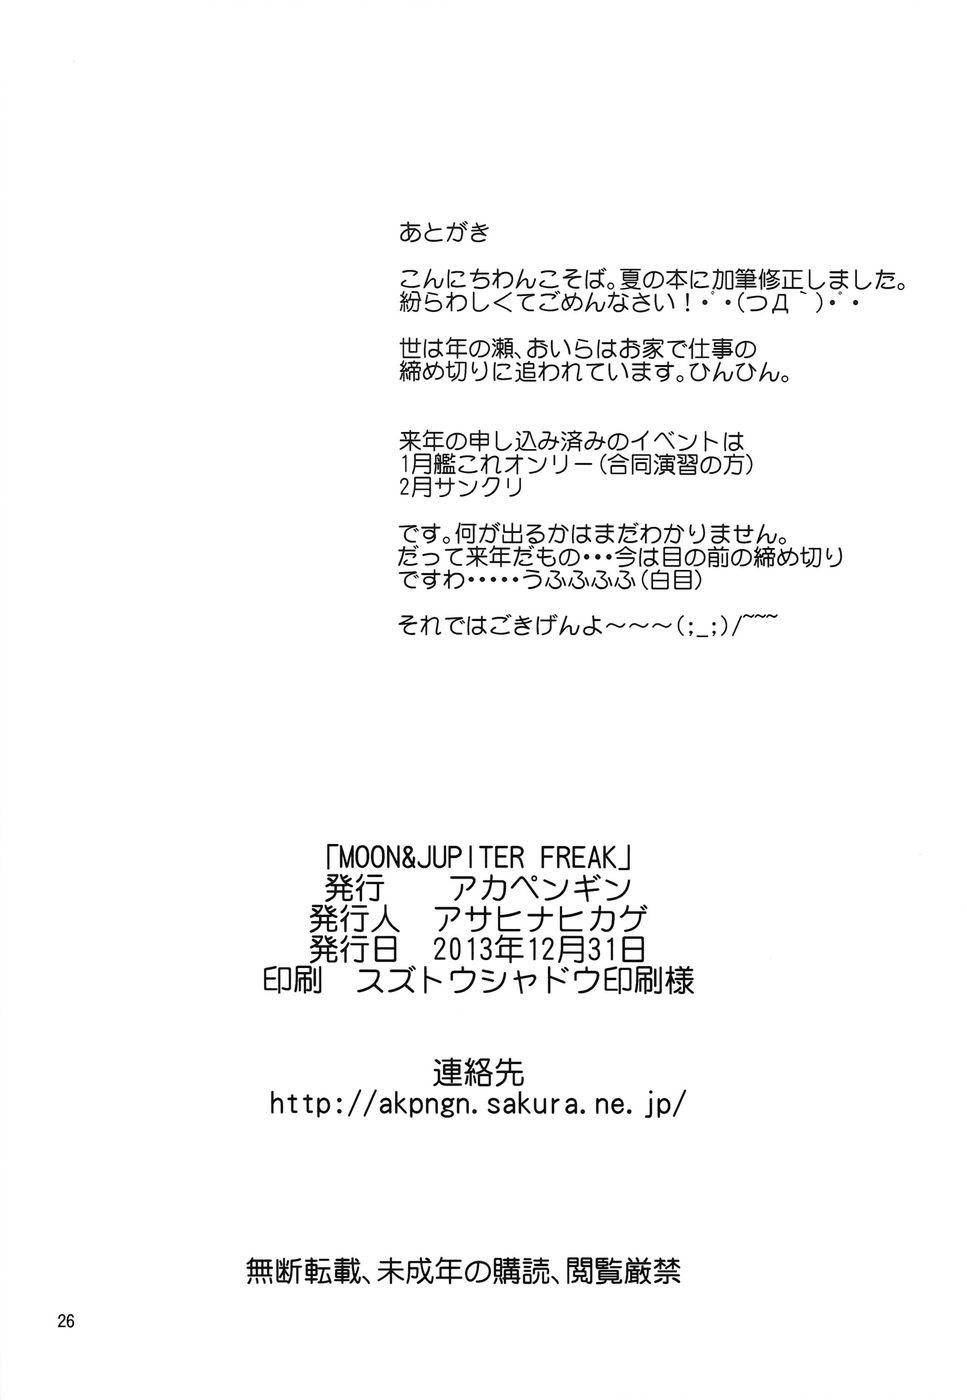 Exposed MOON&JUPITER FREAK - Sailor moon Pee - Page 25